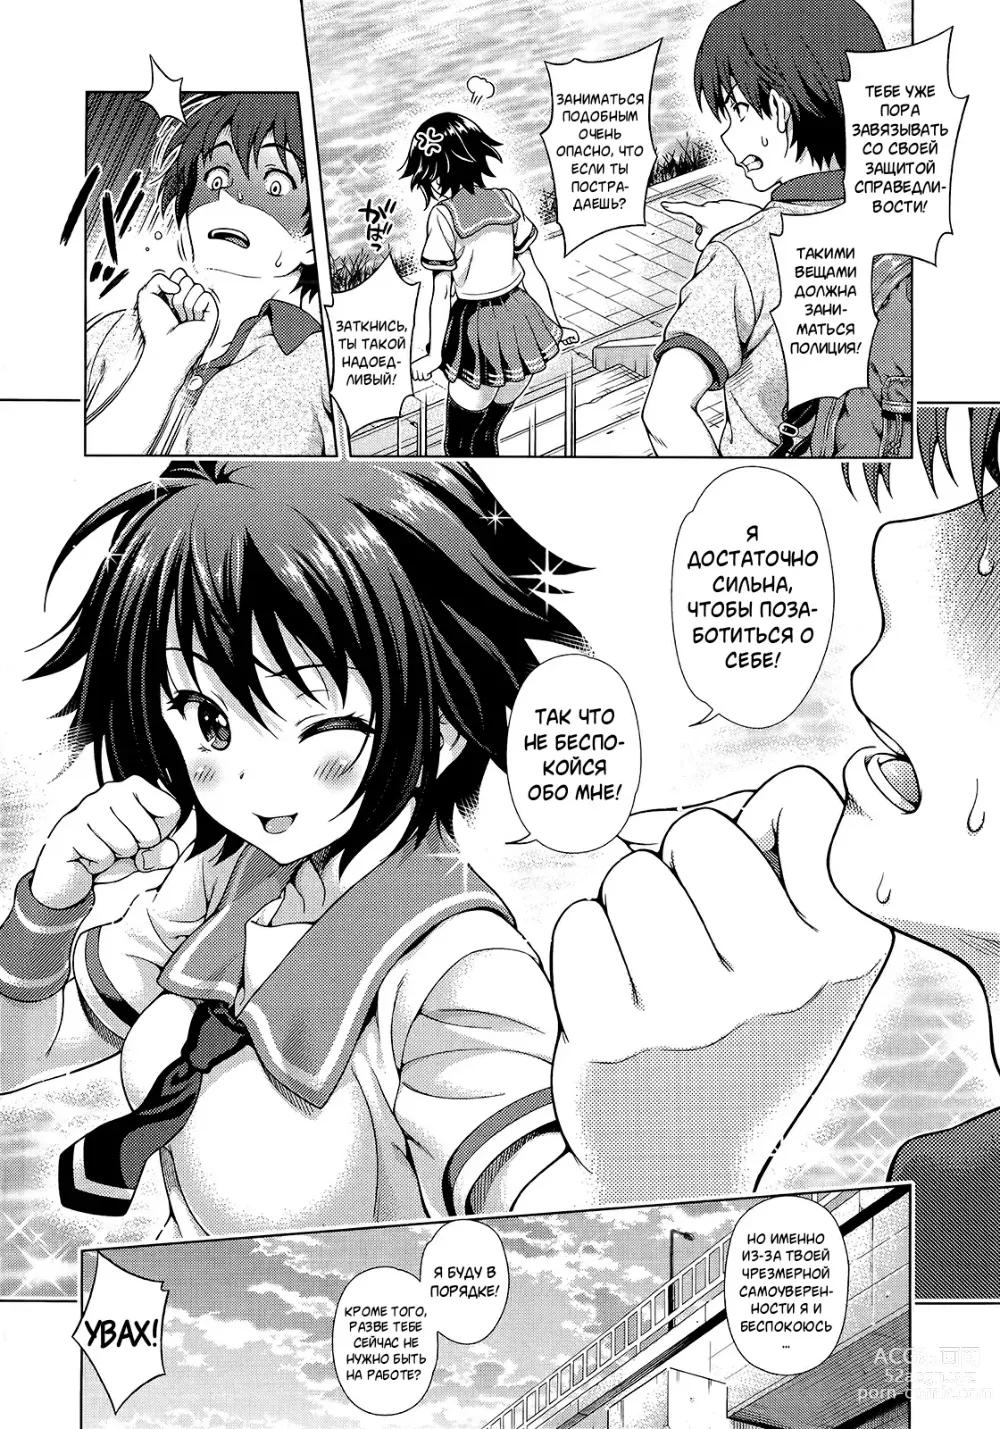 Page 6 of manga Кризис Аой!